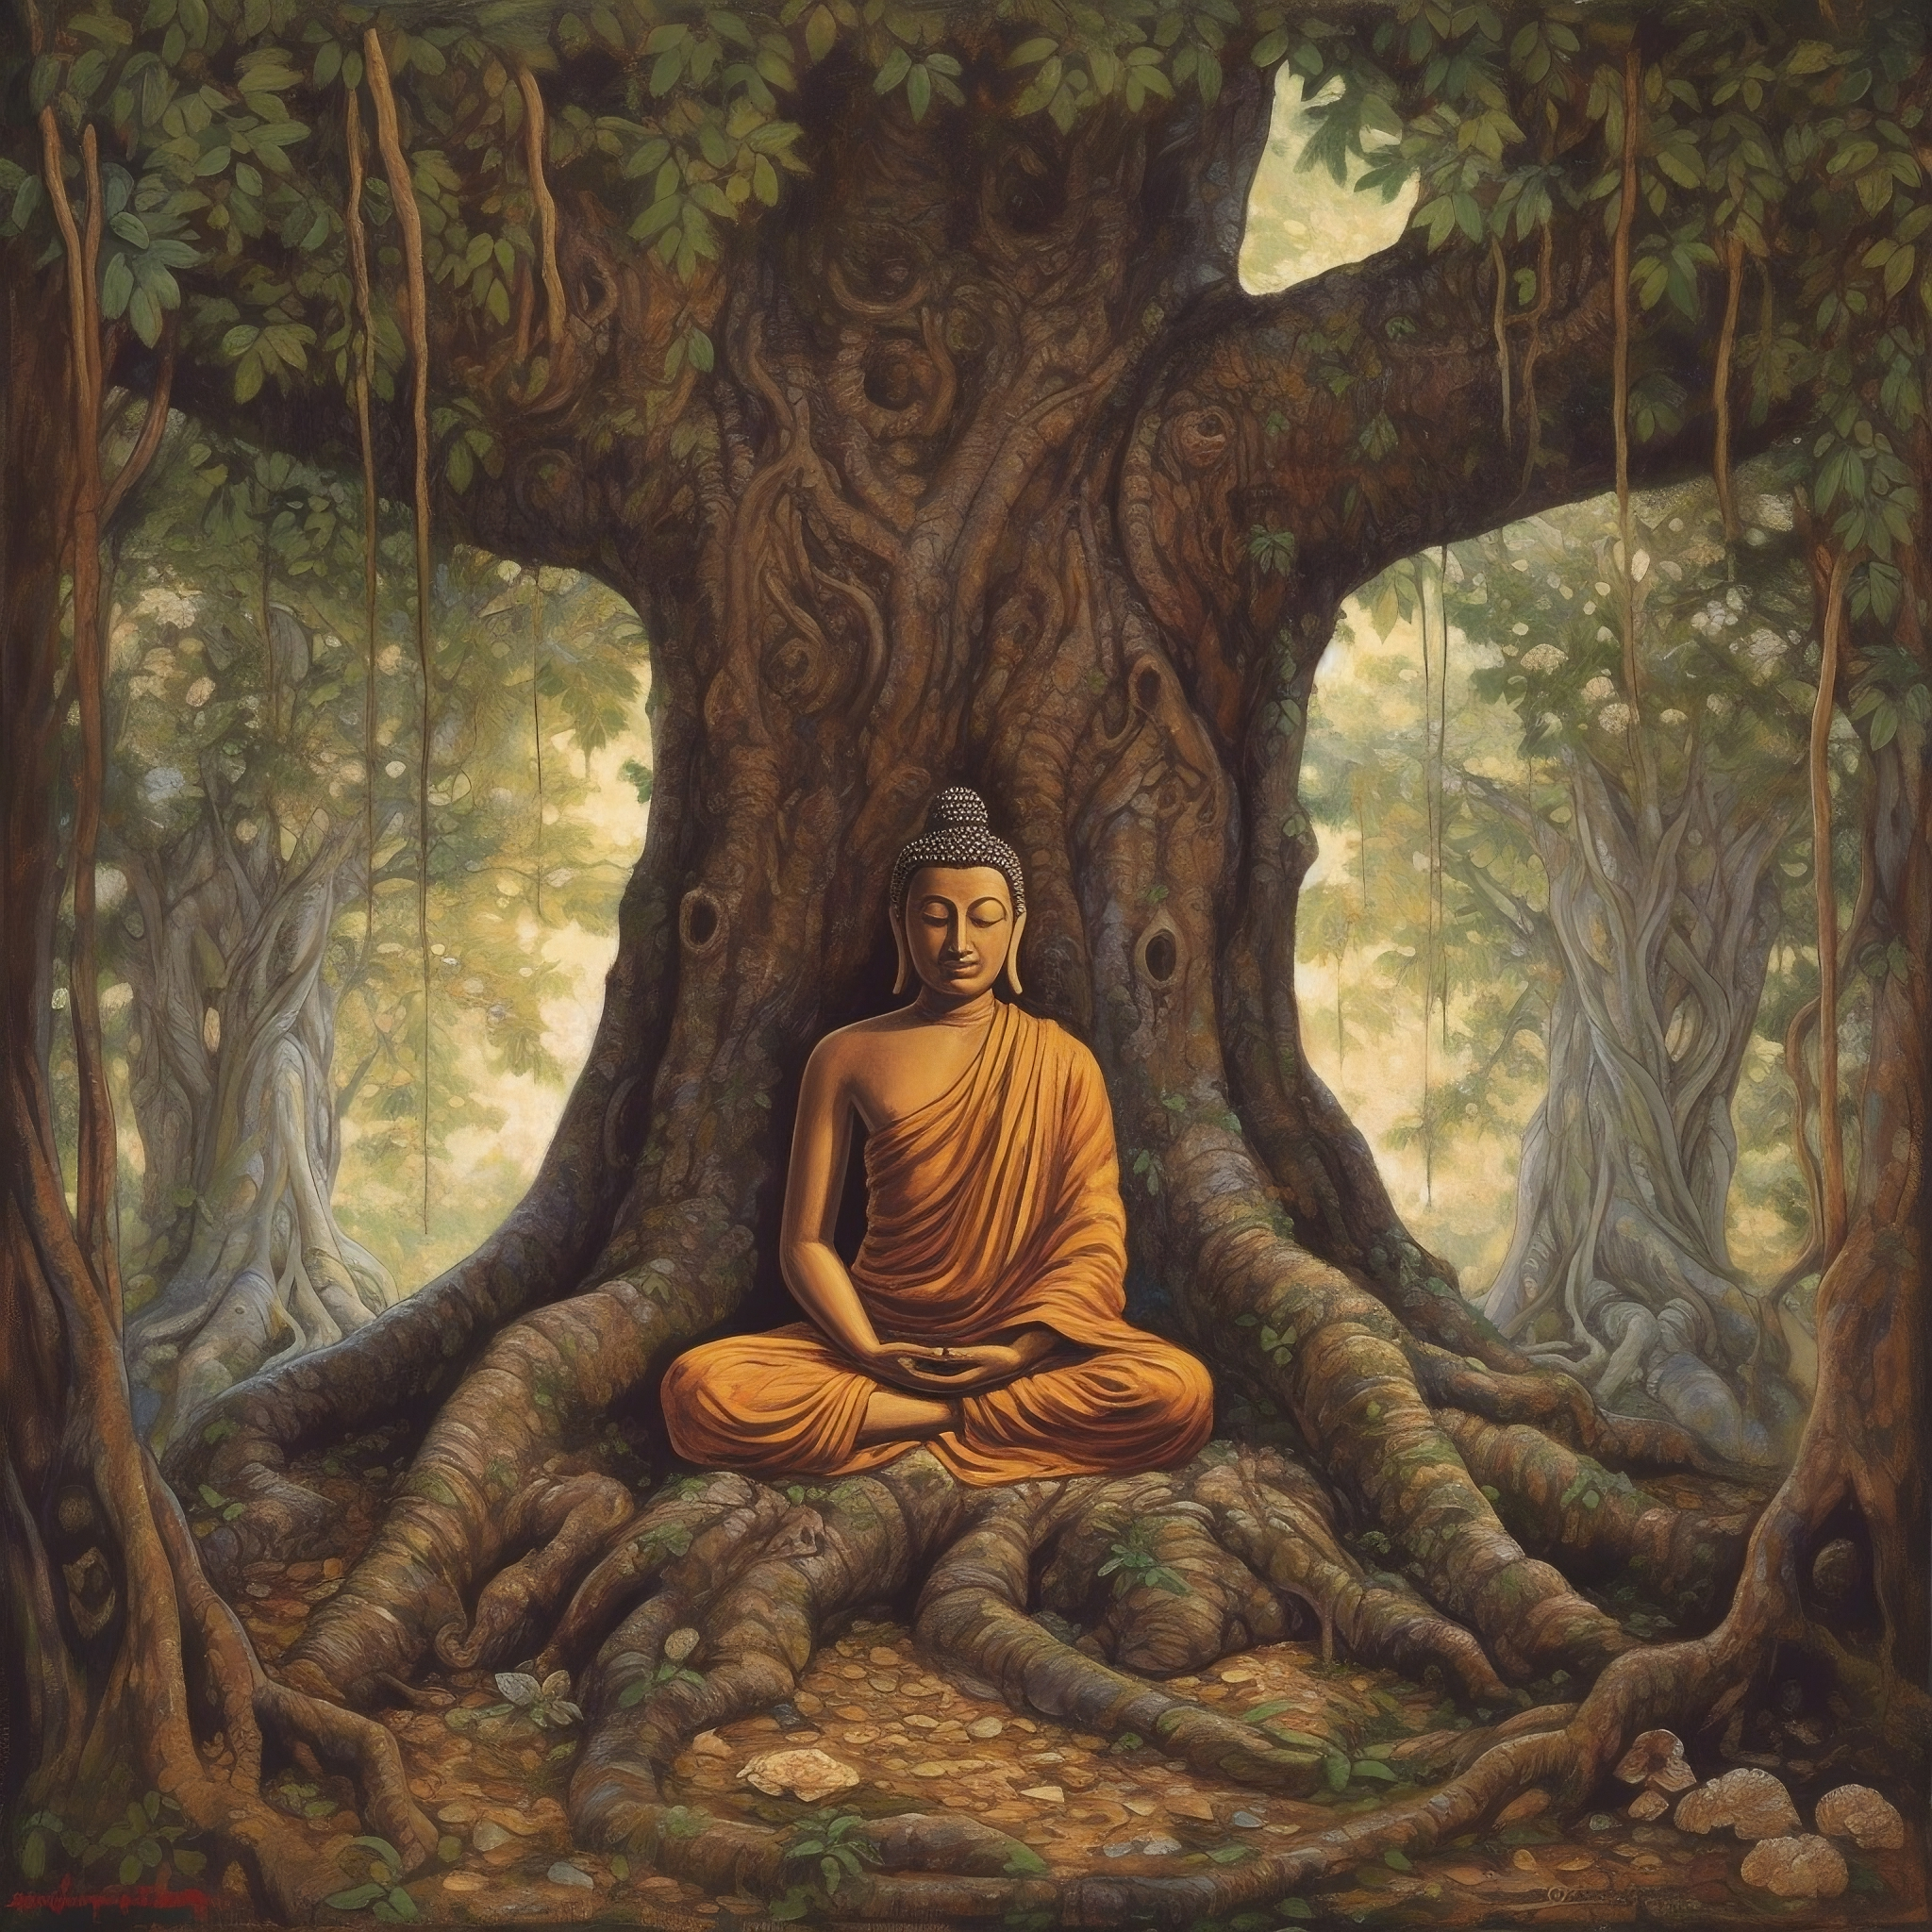 A Beautiful Print of Gautam Buddha Meditating Under an Old Vintage Banyan Tree